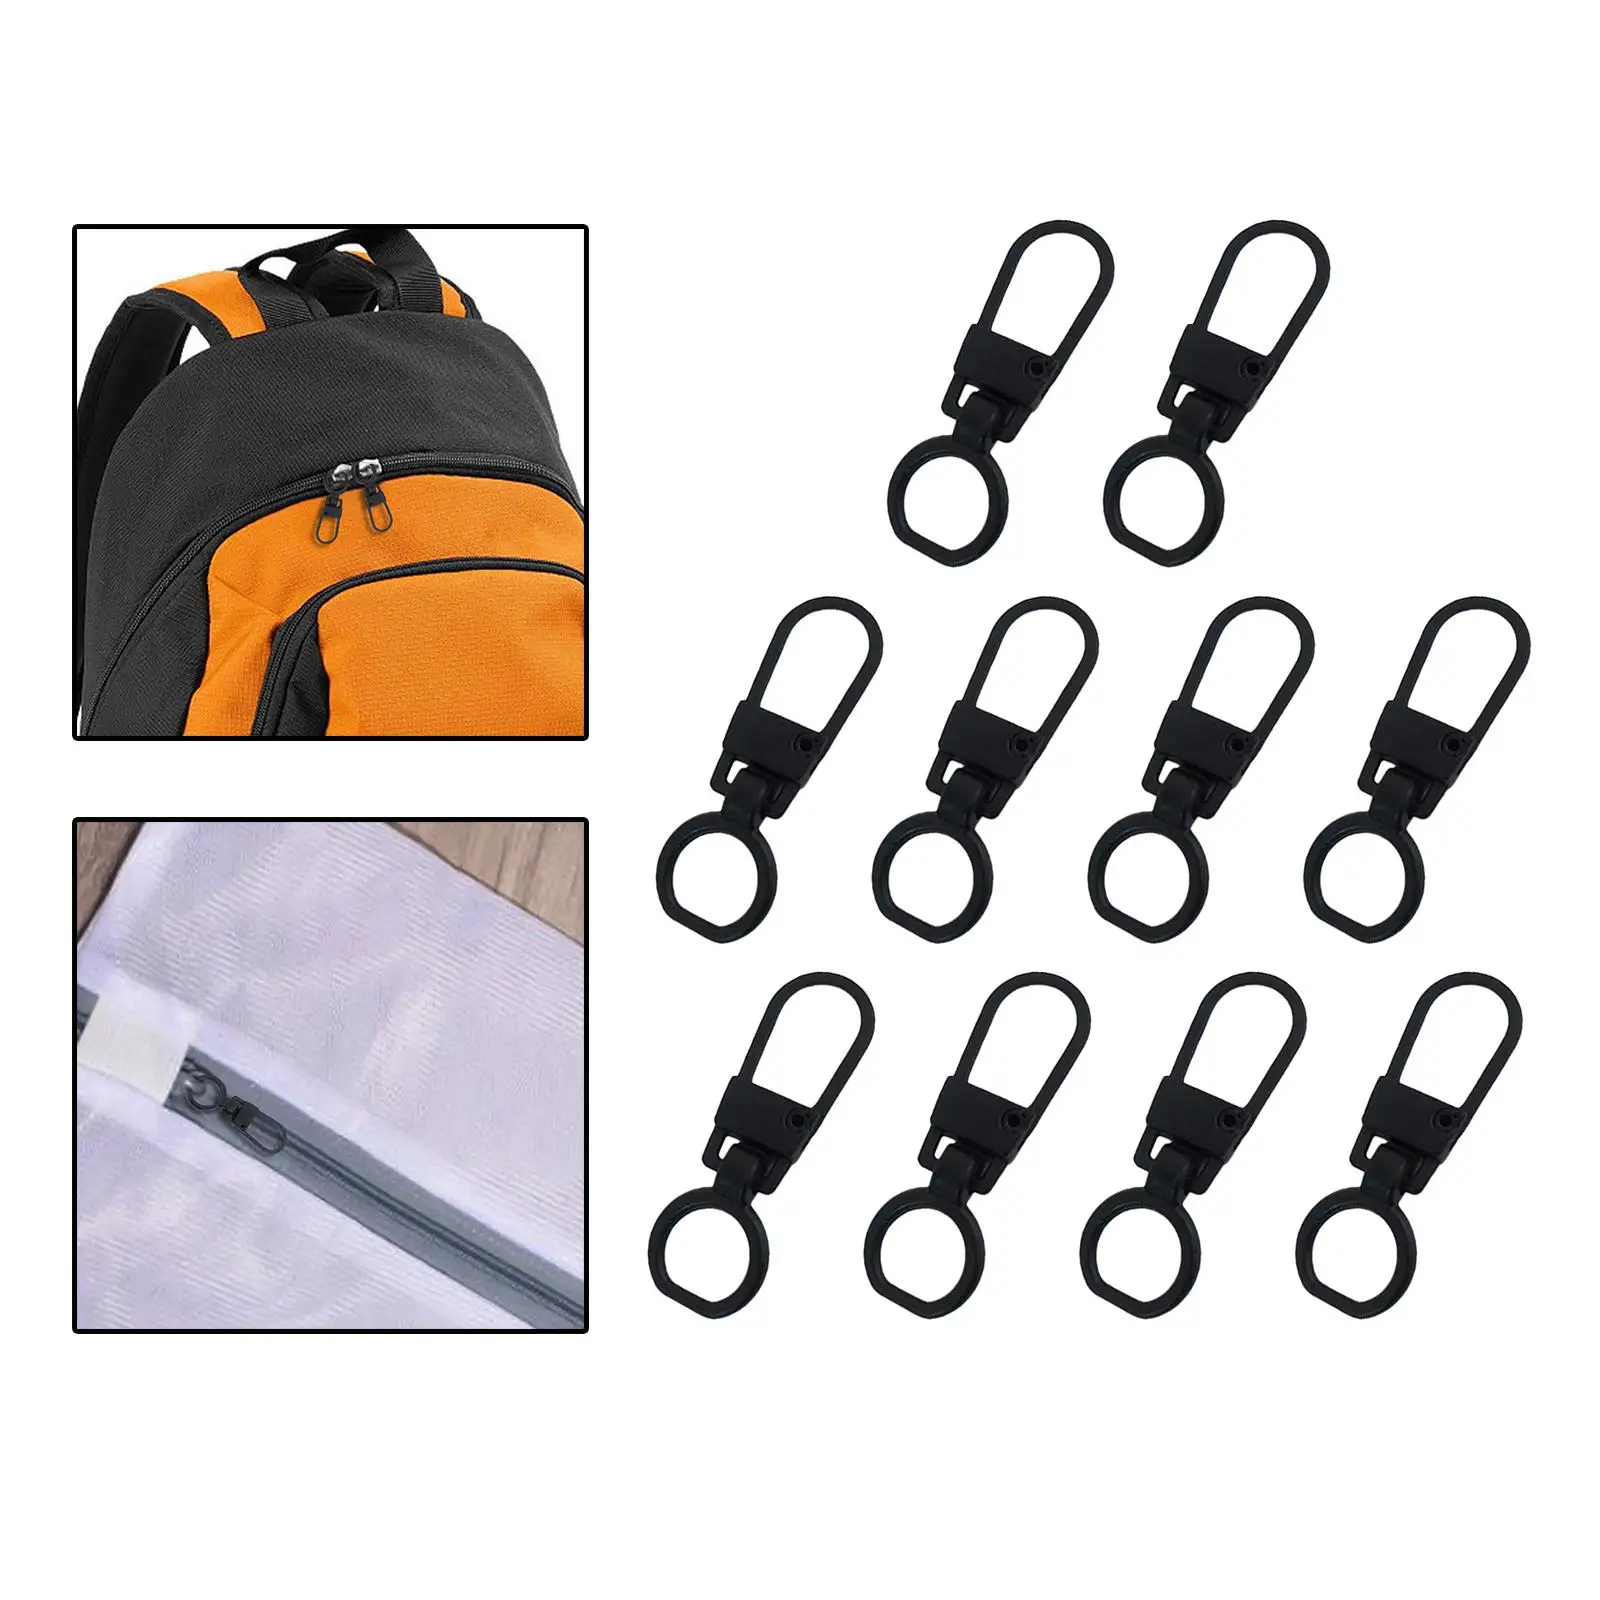 10 Pieces Zipper Pull Tabs Repair Replacement DIY for Bags Handbags Suitcase